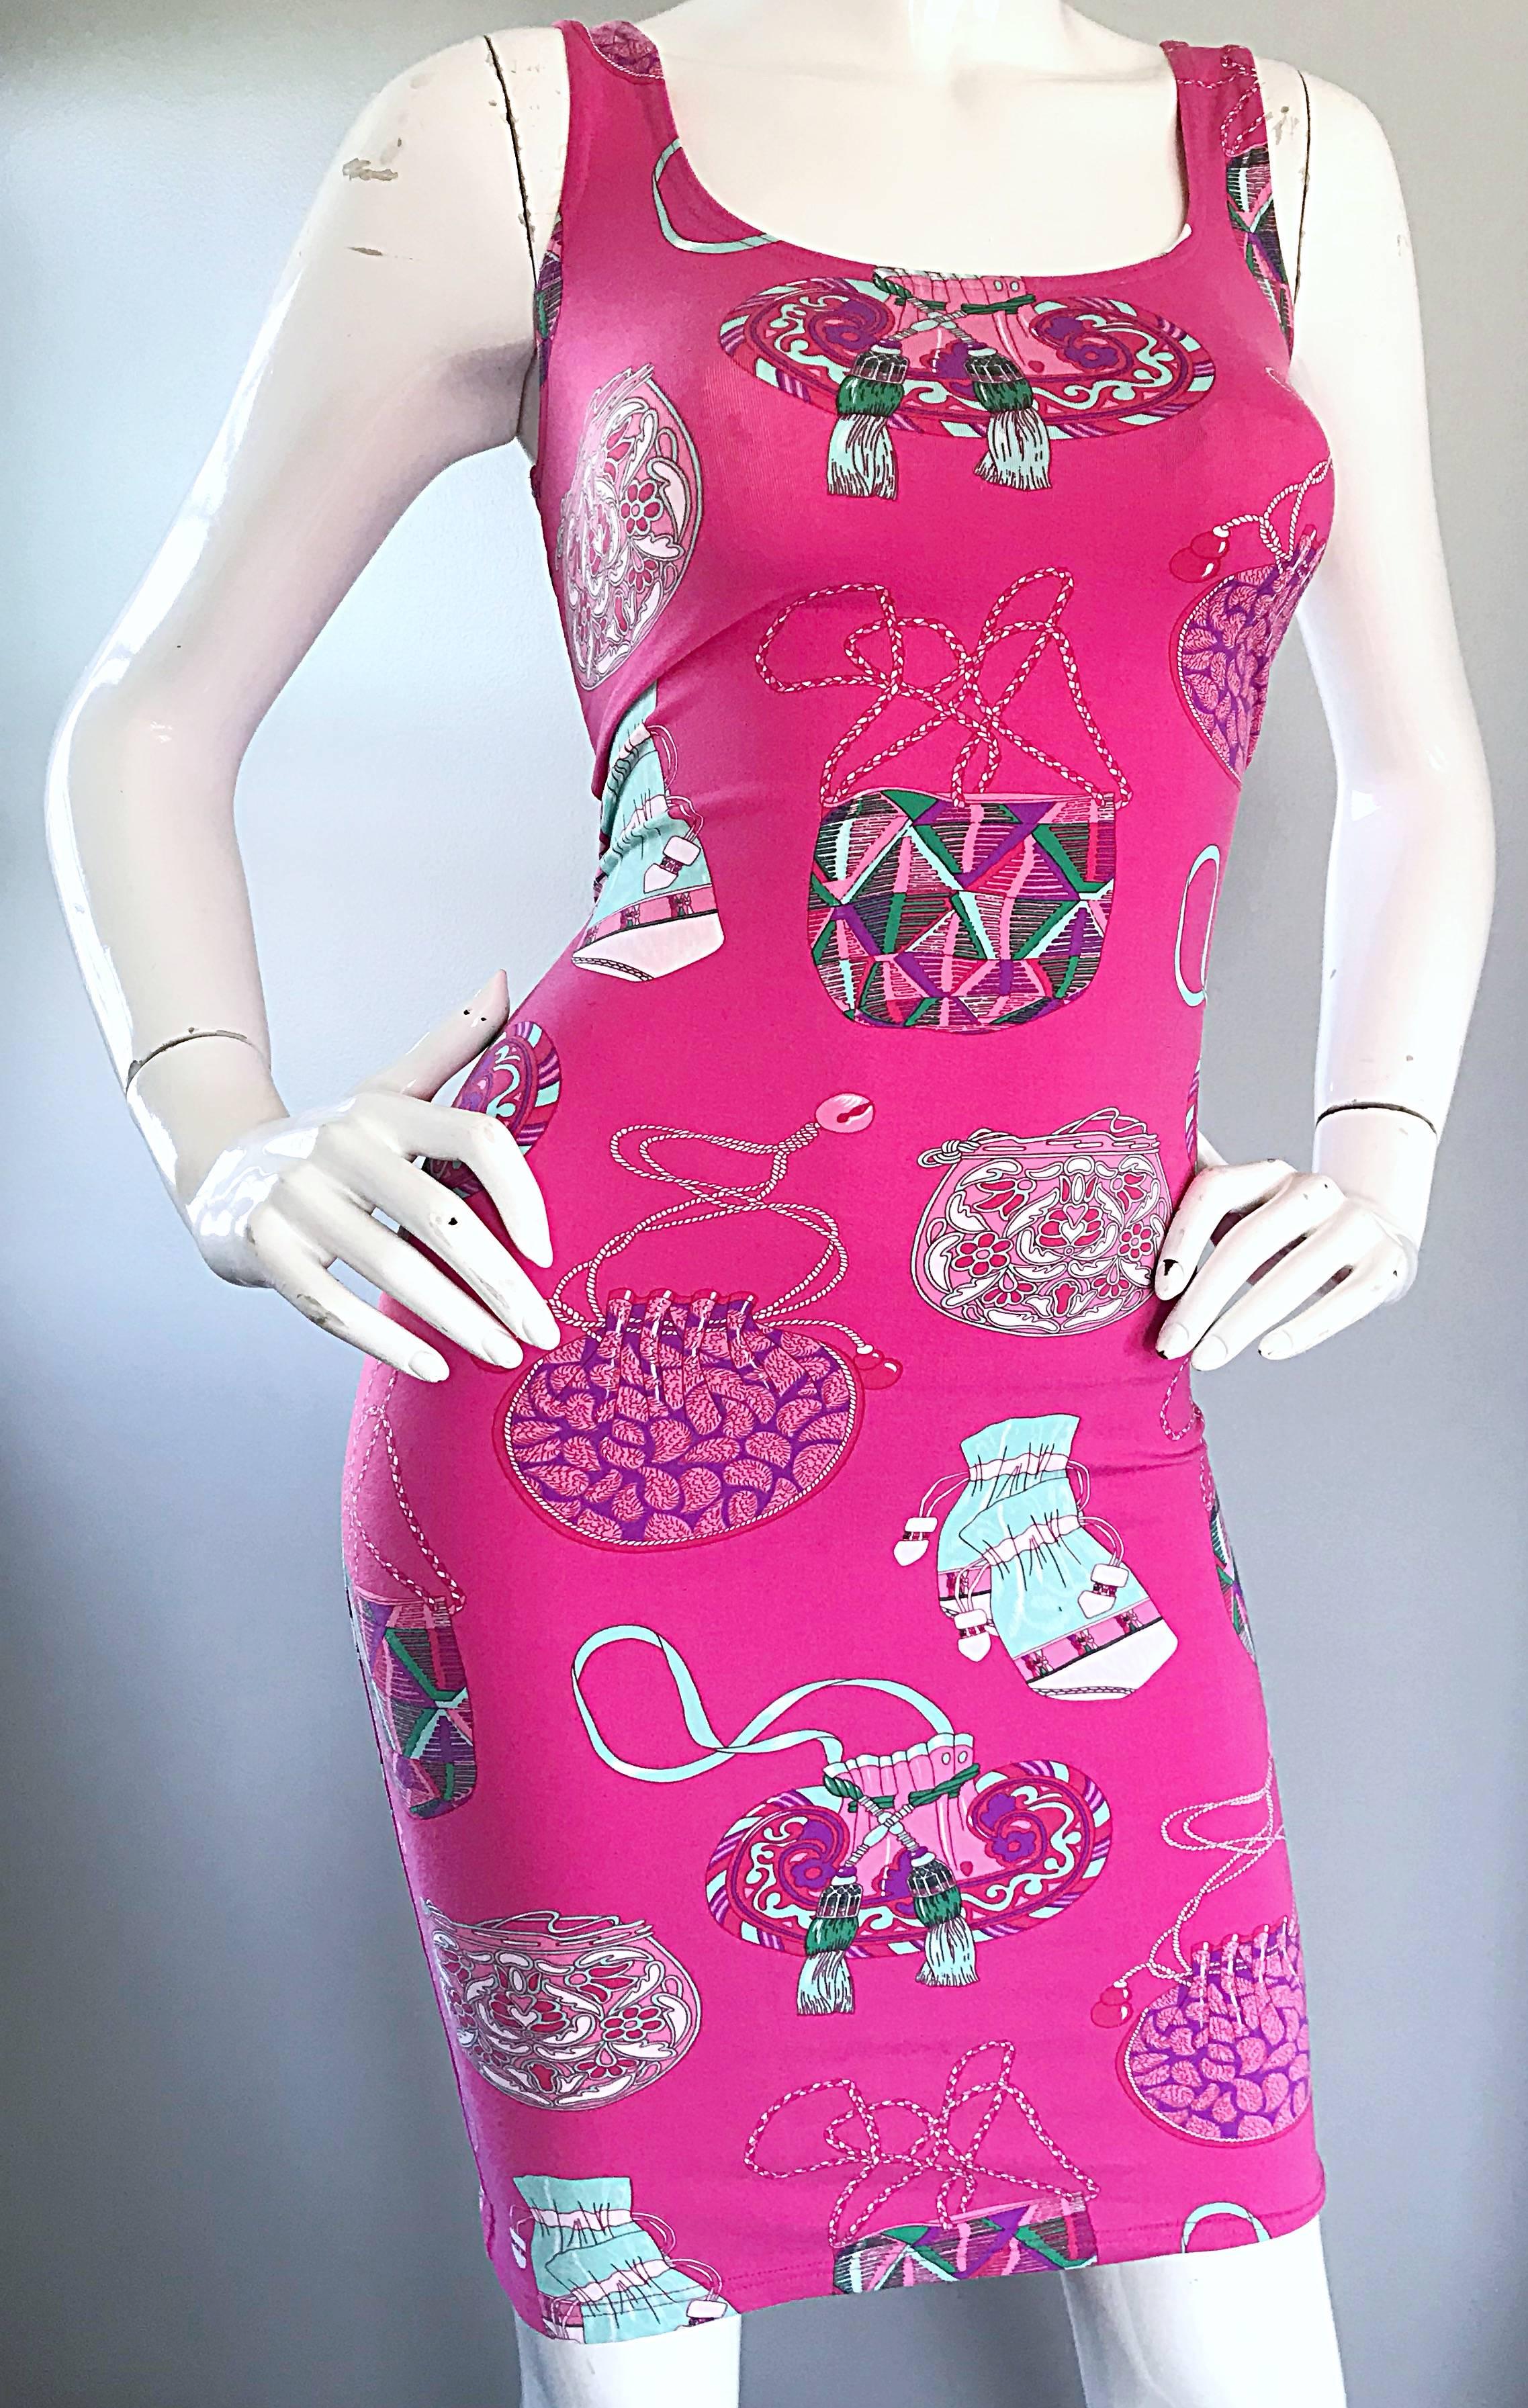 Women's New Manuel Canovas 1990s Hot Pink Purse Handbag Novelty Print 90s Bodycon Dress